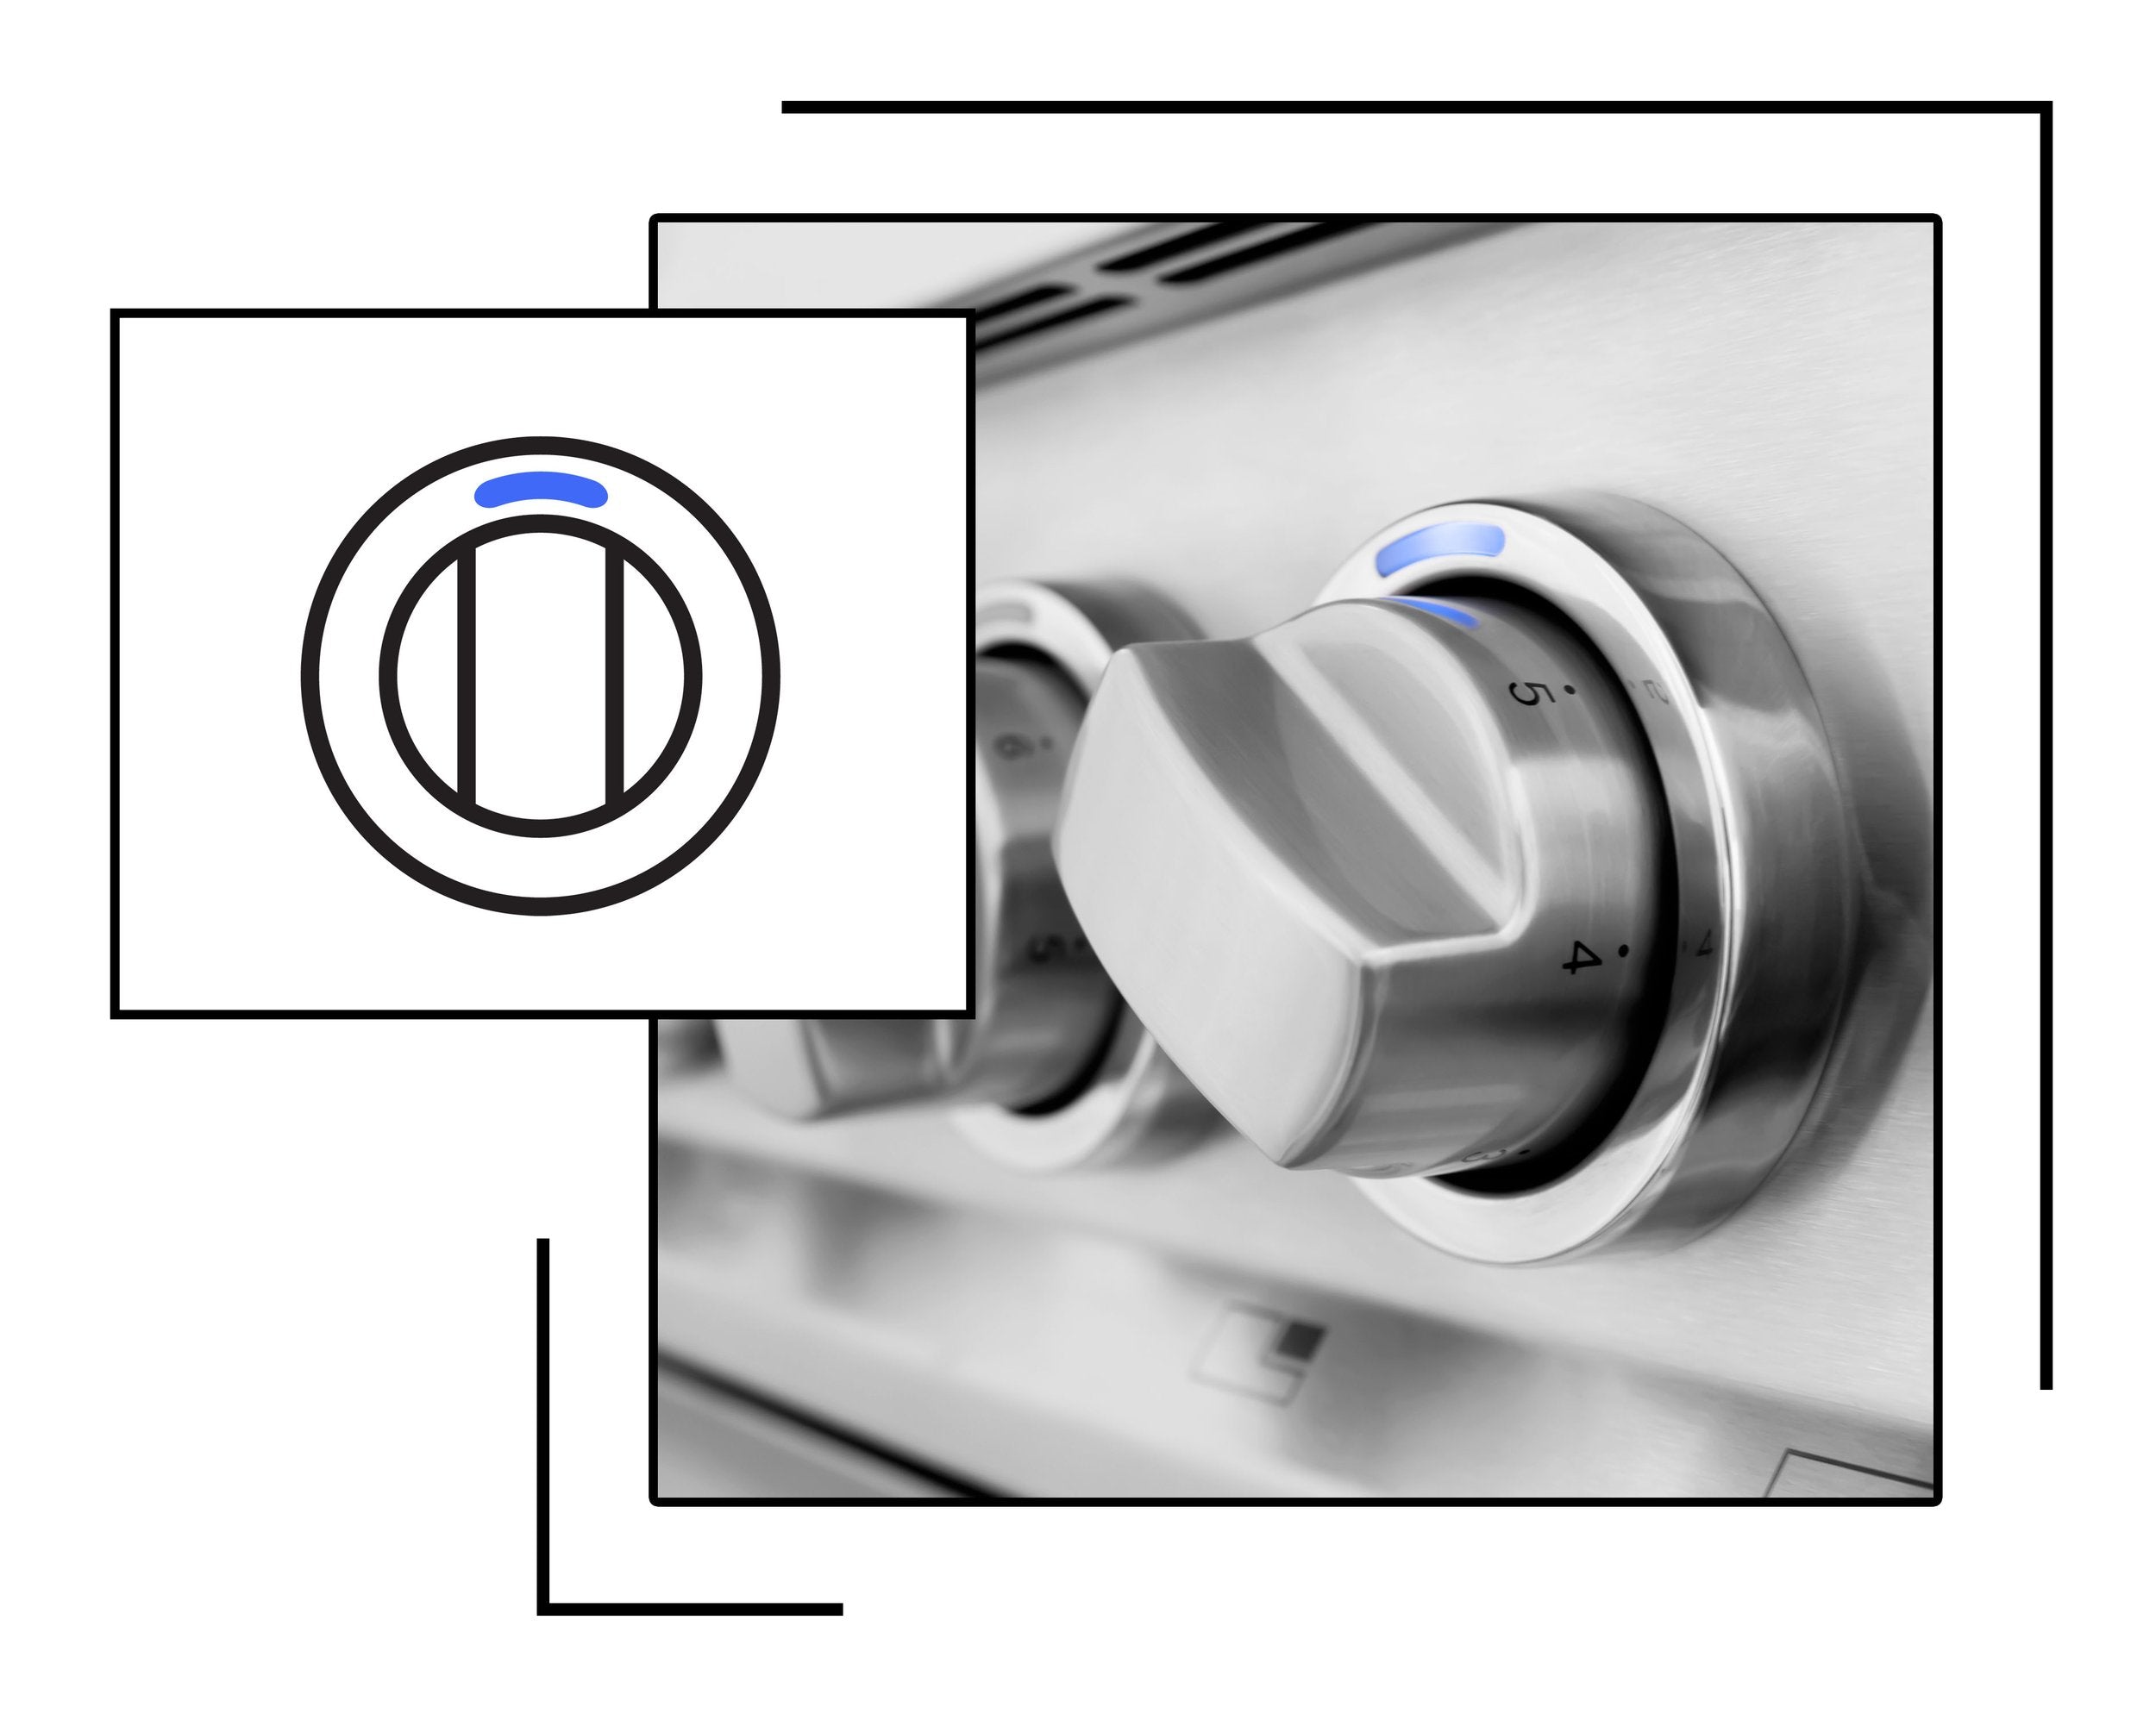 Icon and image representing LED indicators on induction range knobs